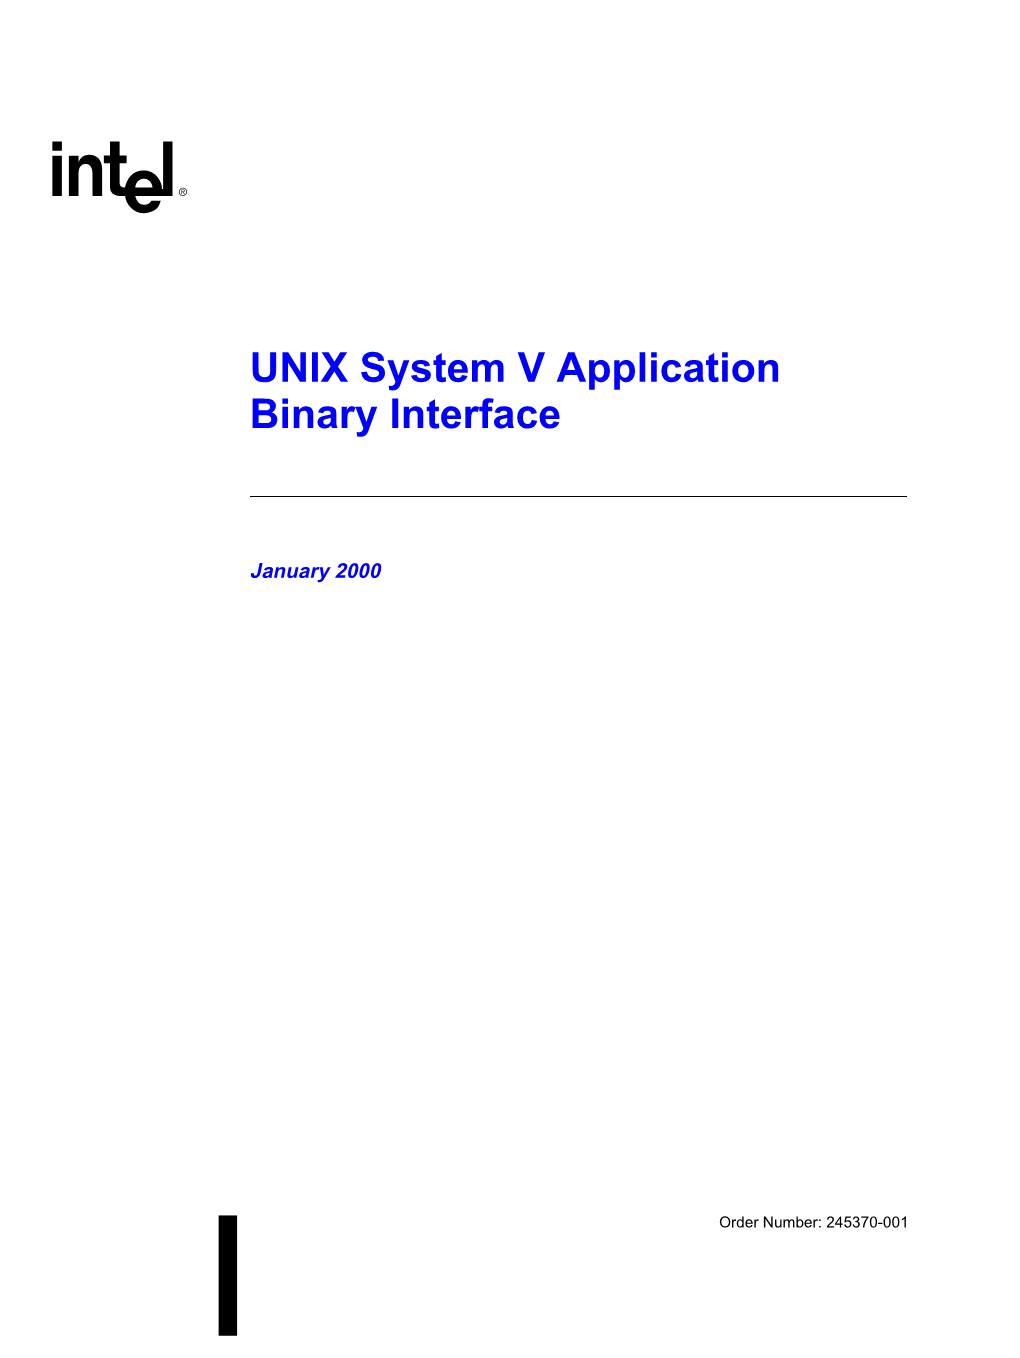 IA-64 UNIX System V Application Binary Interface